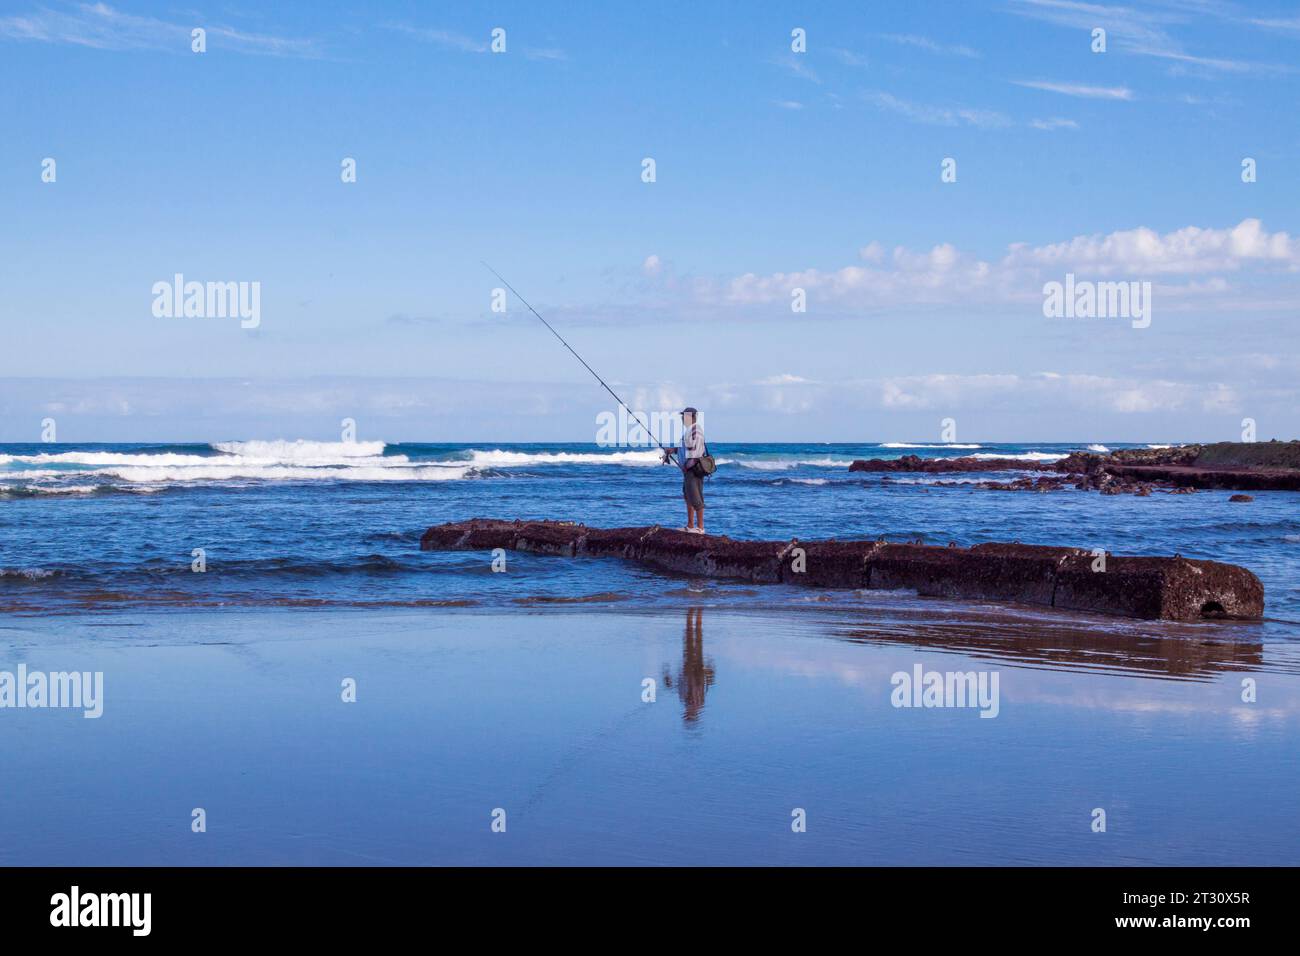 A fisherman fishing on Bocabarranco Beach in Gran Canaria, Spain Stock Photo